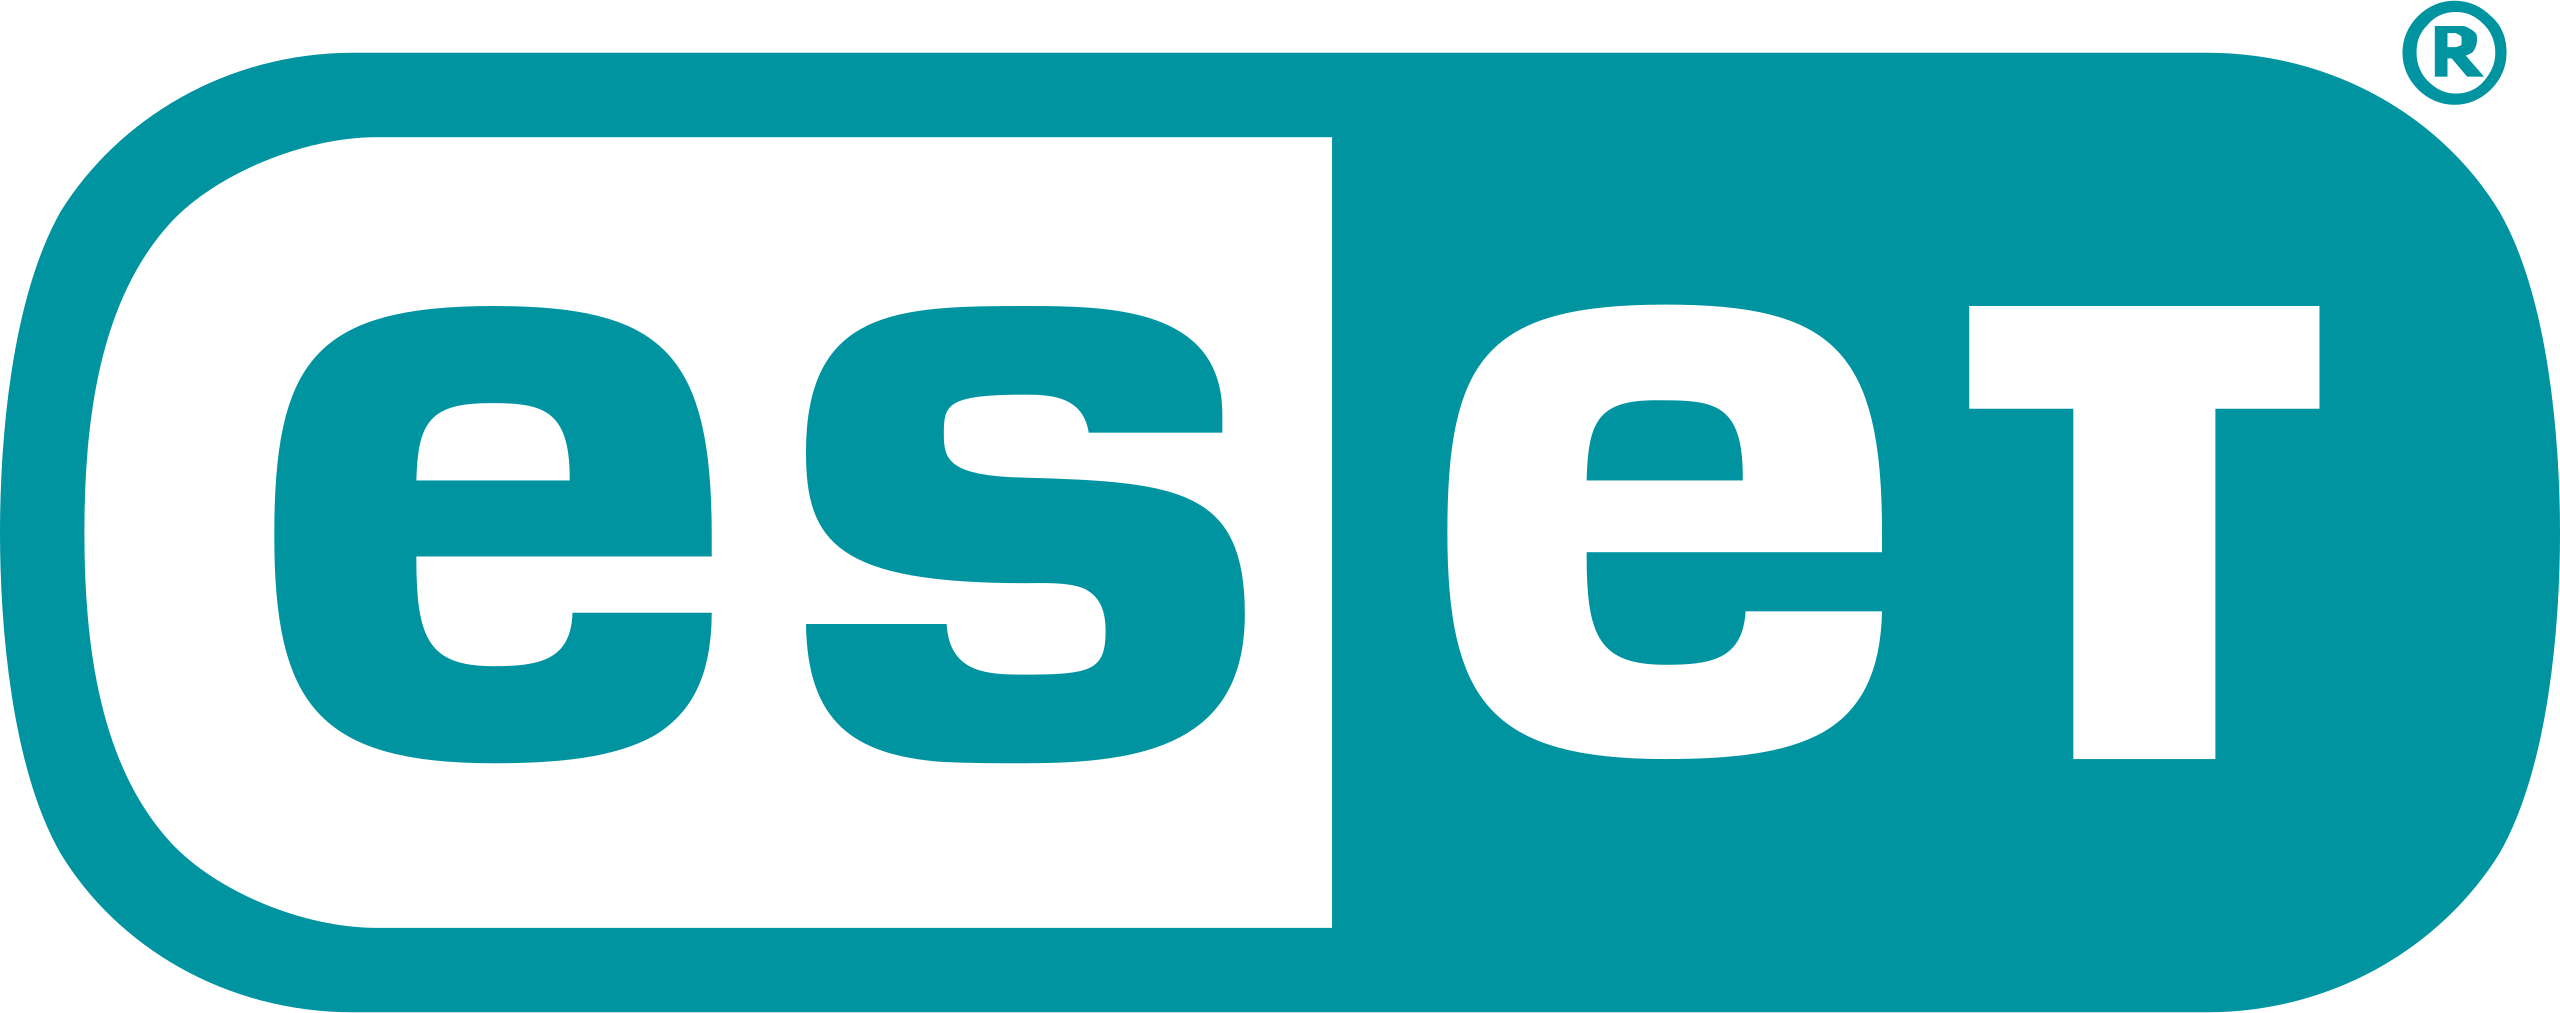 logo ESET png